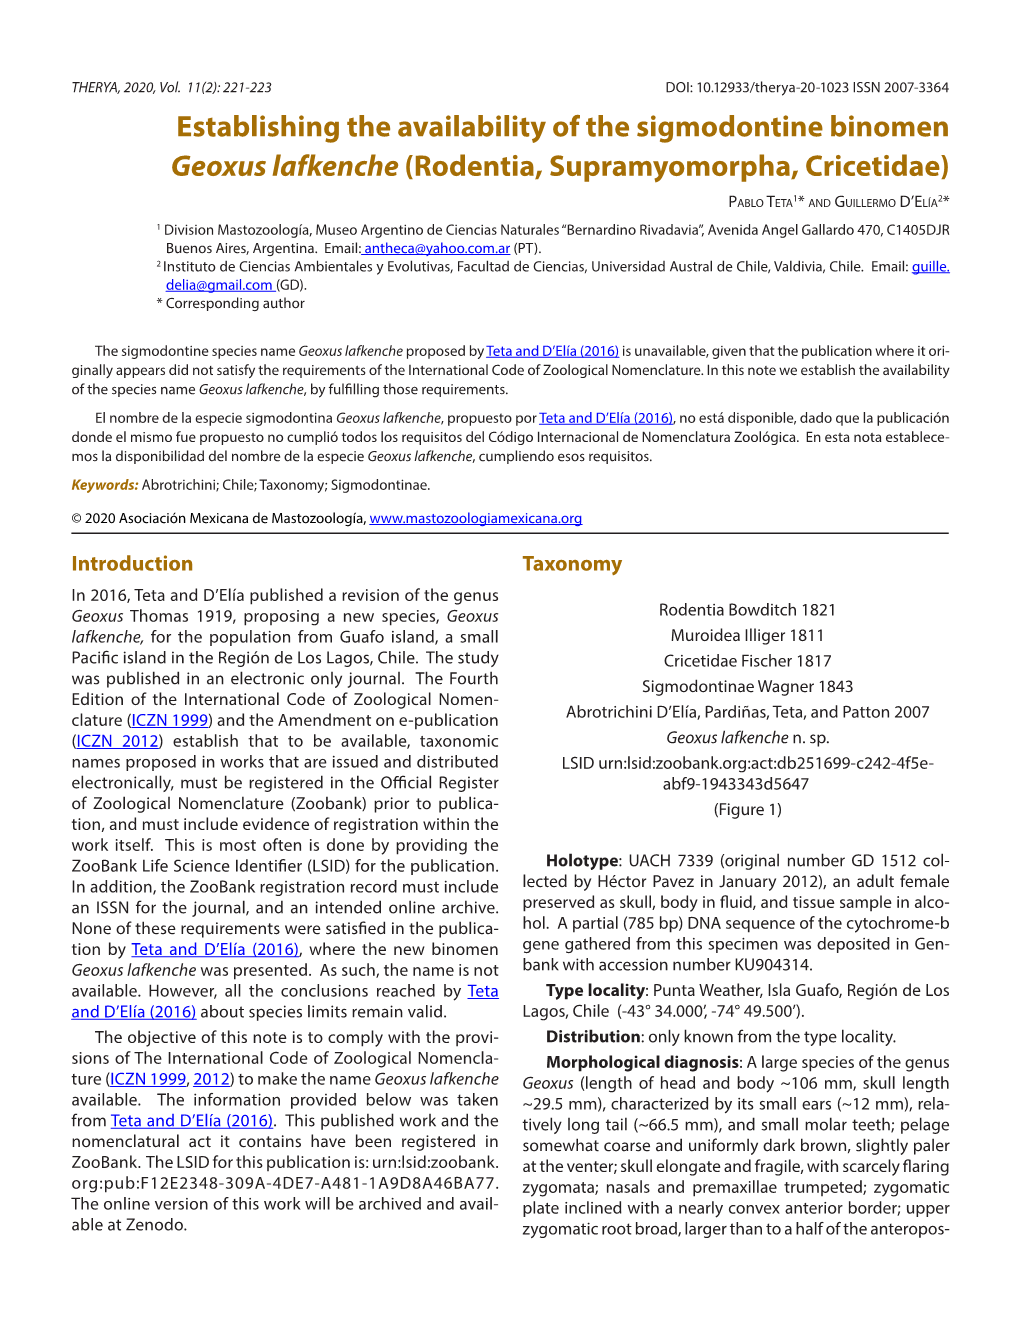 Establishing the Availability of the Sigmodontine Binomen Geoxus Lafkenche (Rodentia, Supramyomorpha, Cricetidae)